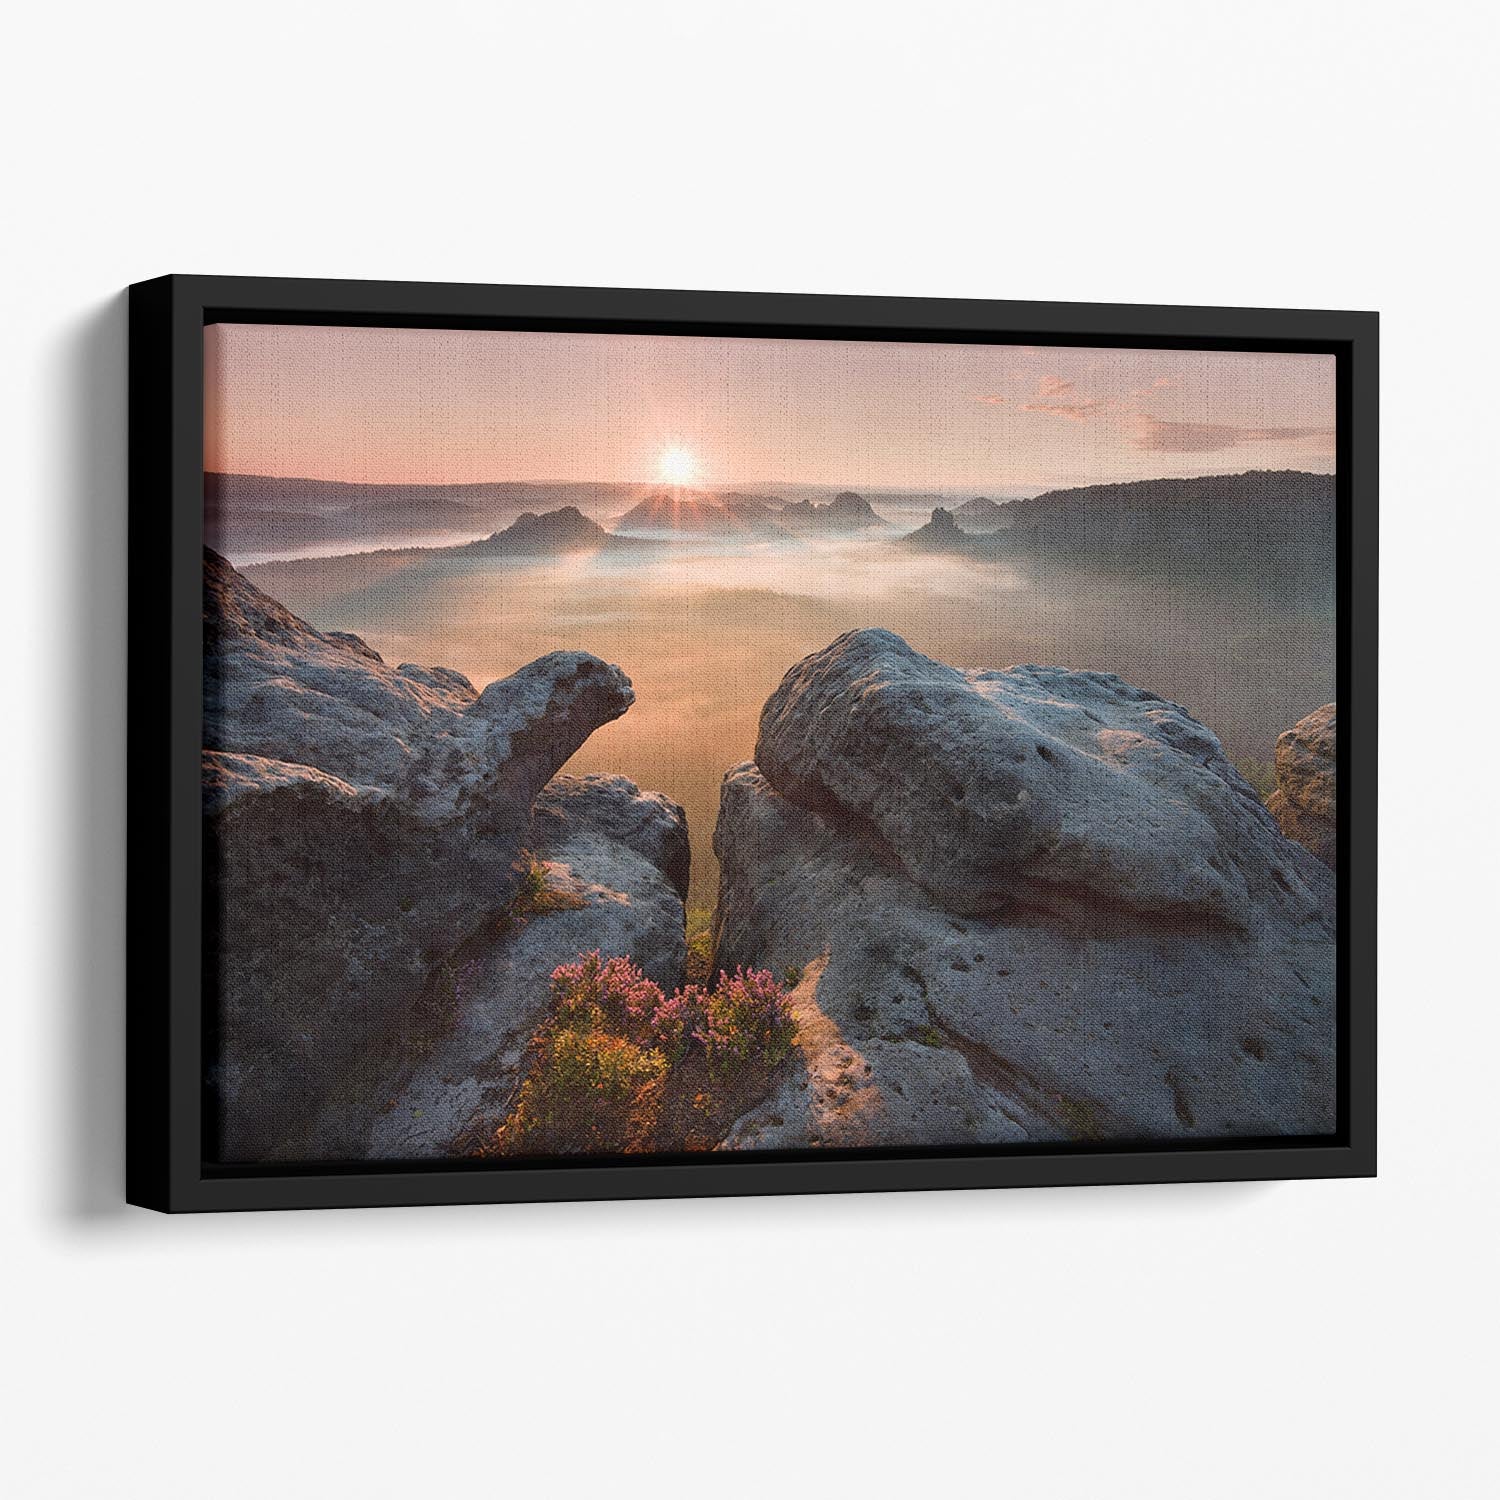 Sunrise On The Rocks Floating Framed Canvas - Canvas Art Rocks - 1